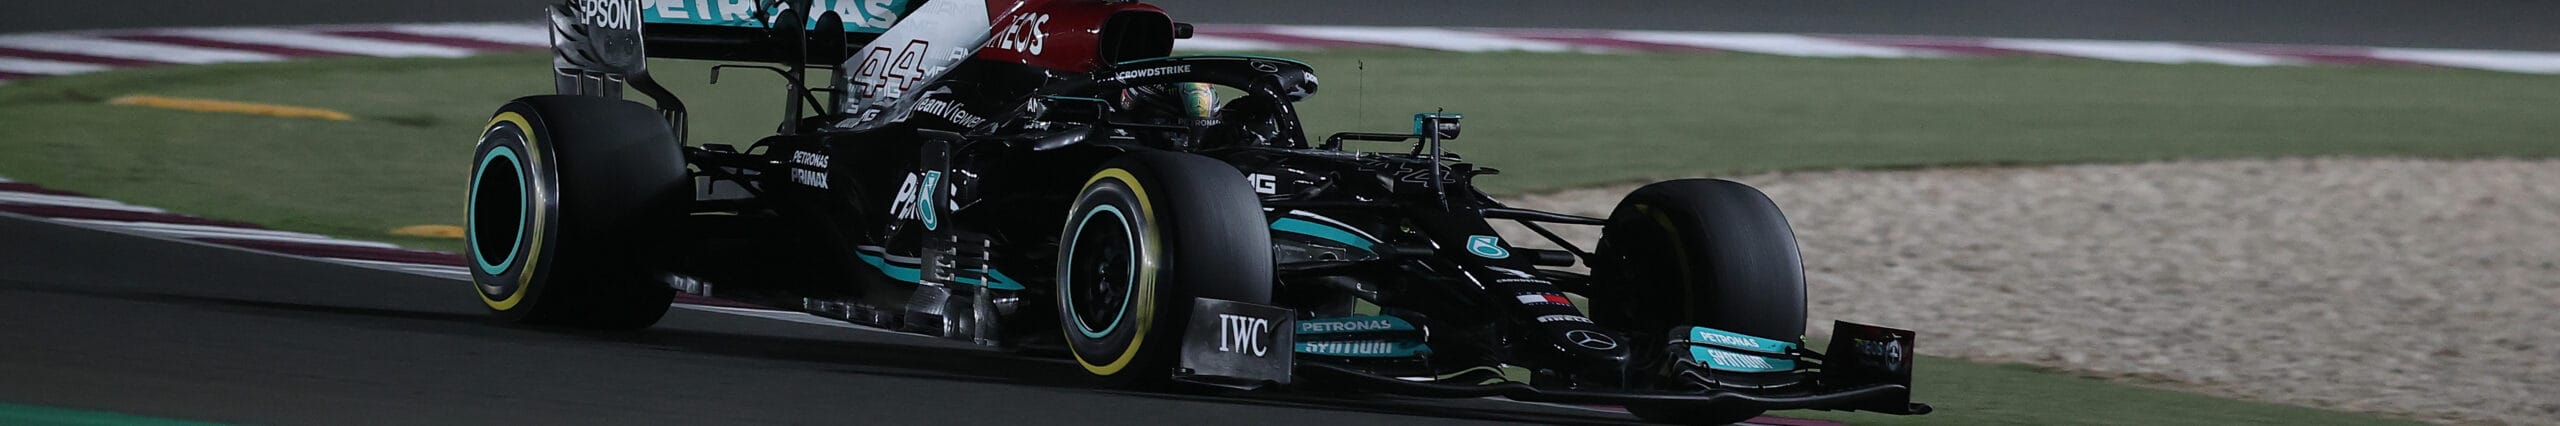 Saudi Arabia Grand Prix: Fast circuit suits Hamilton